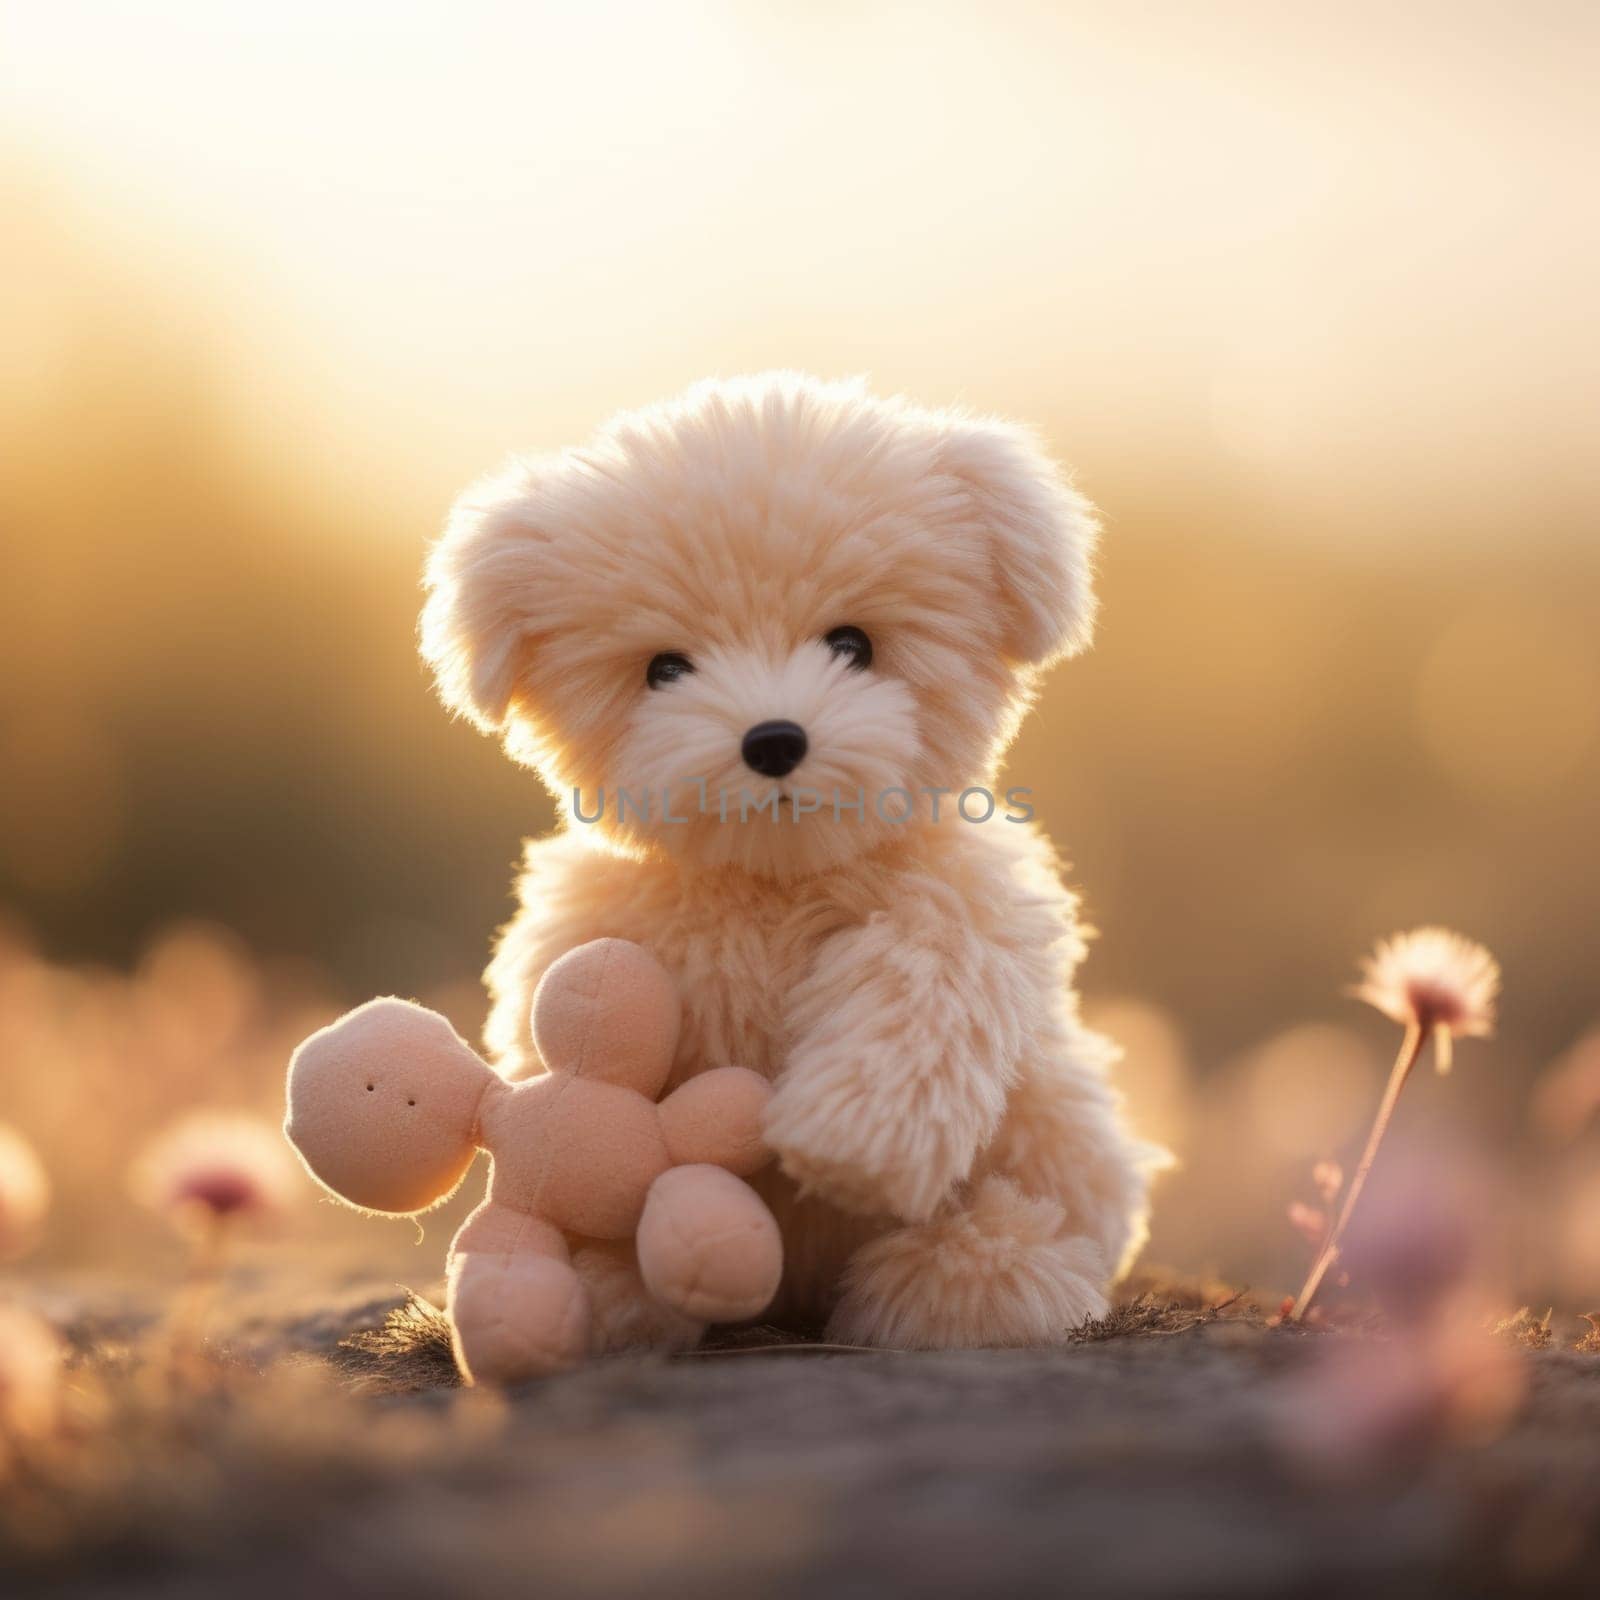 A small teddy bear sitting on a rock, AI by starush